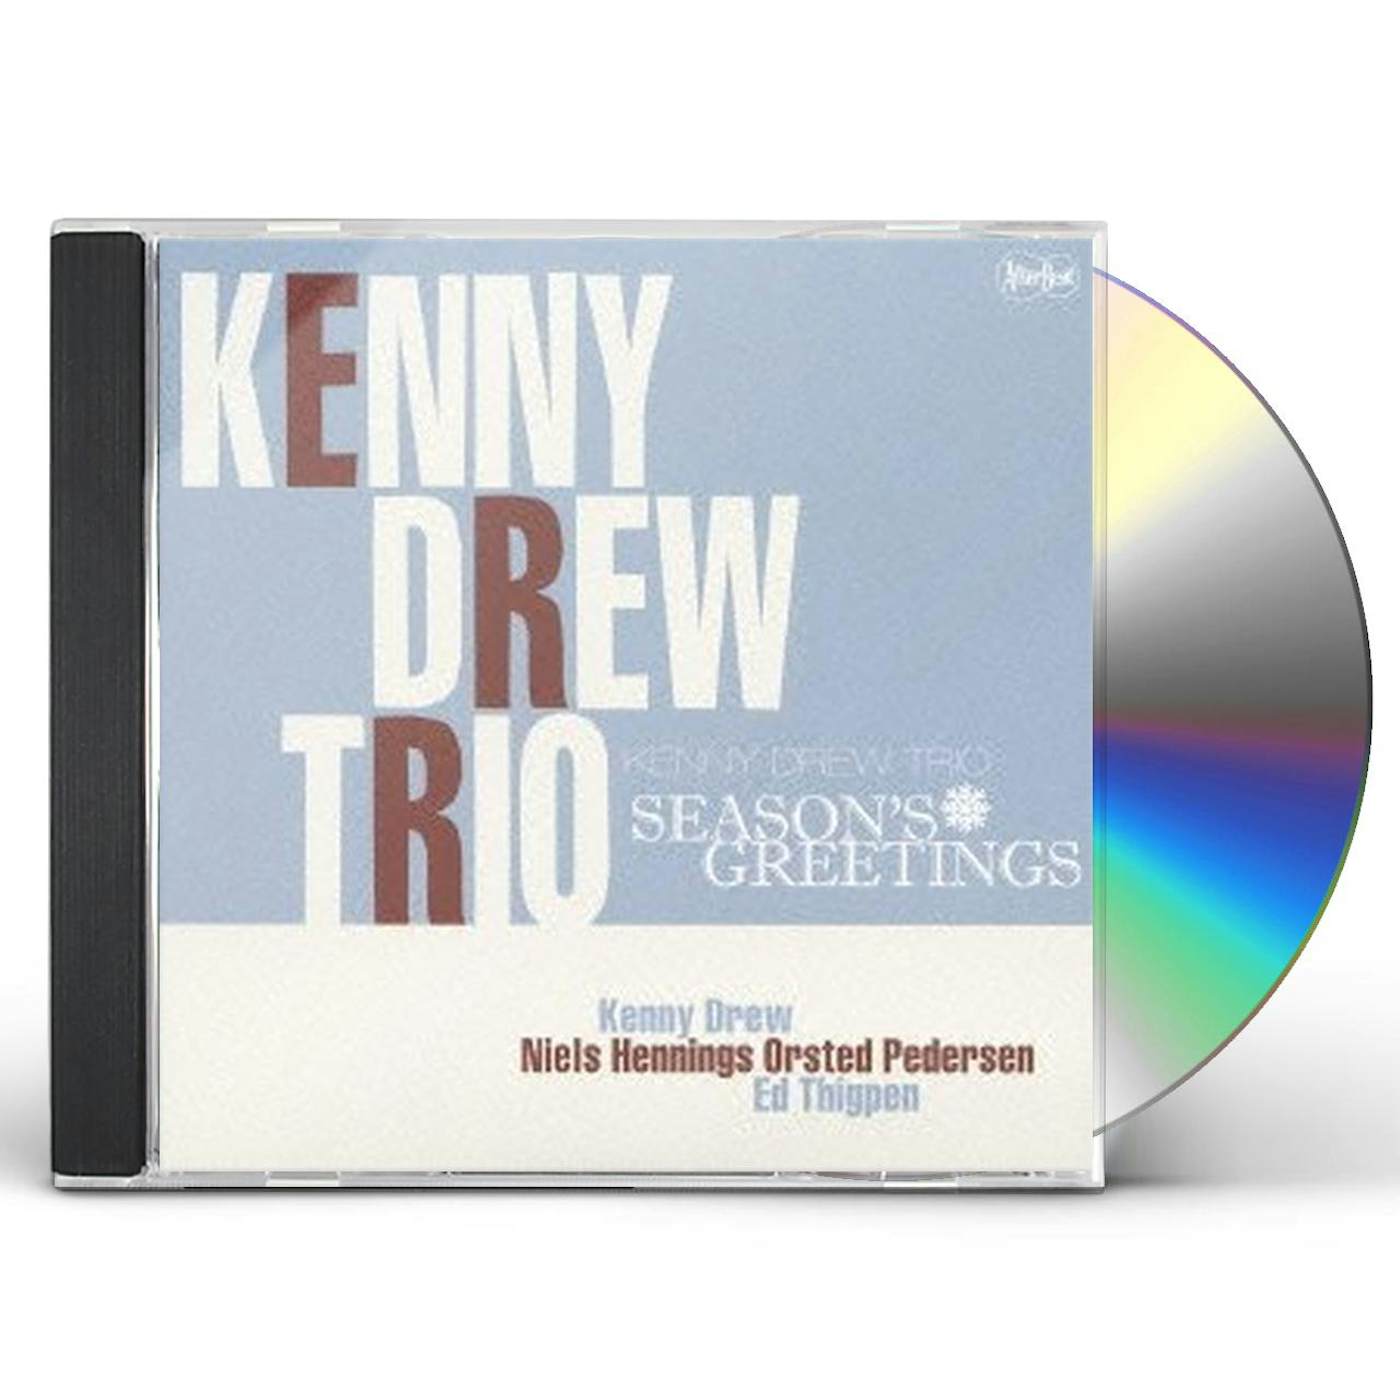 Kenny Drew EASON'S GREETING CD